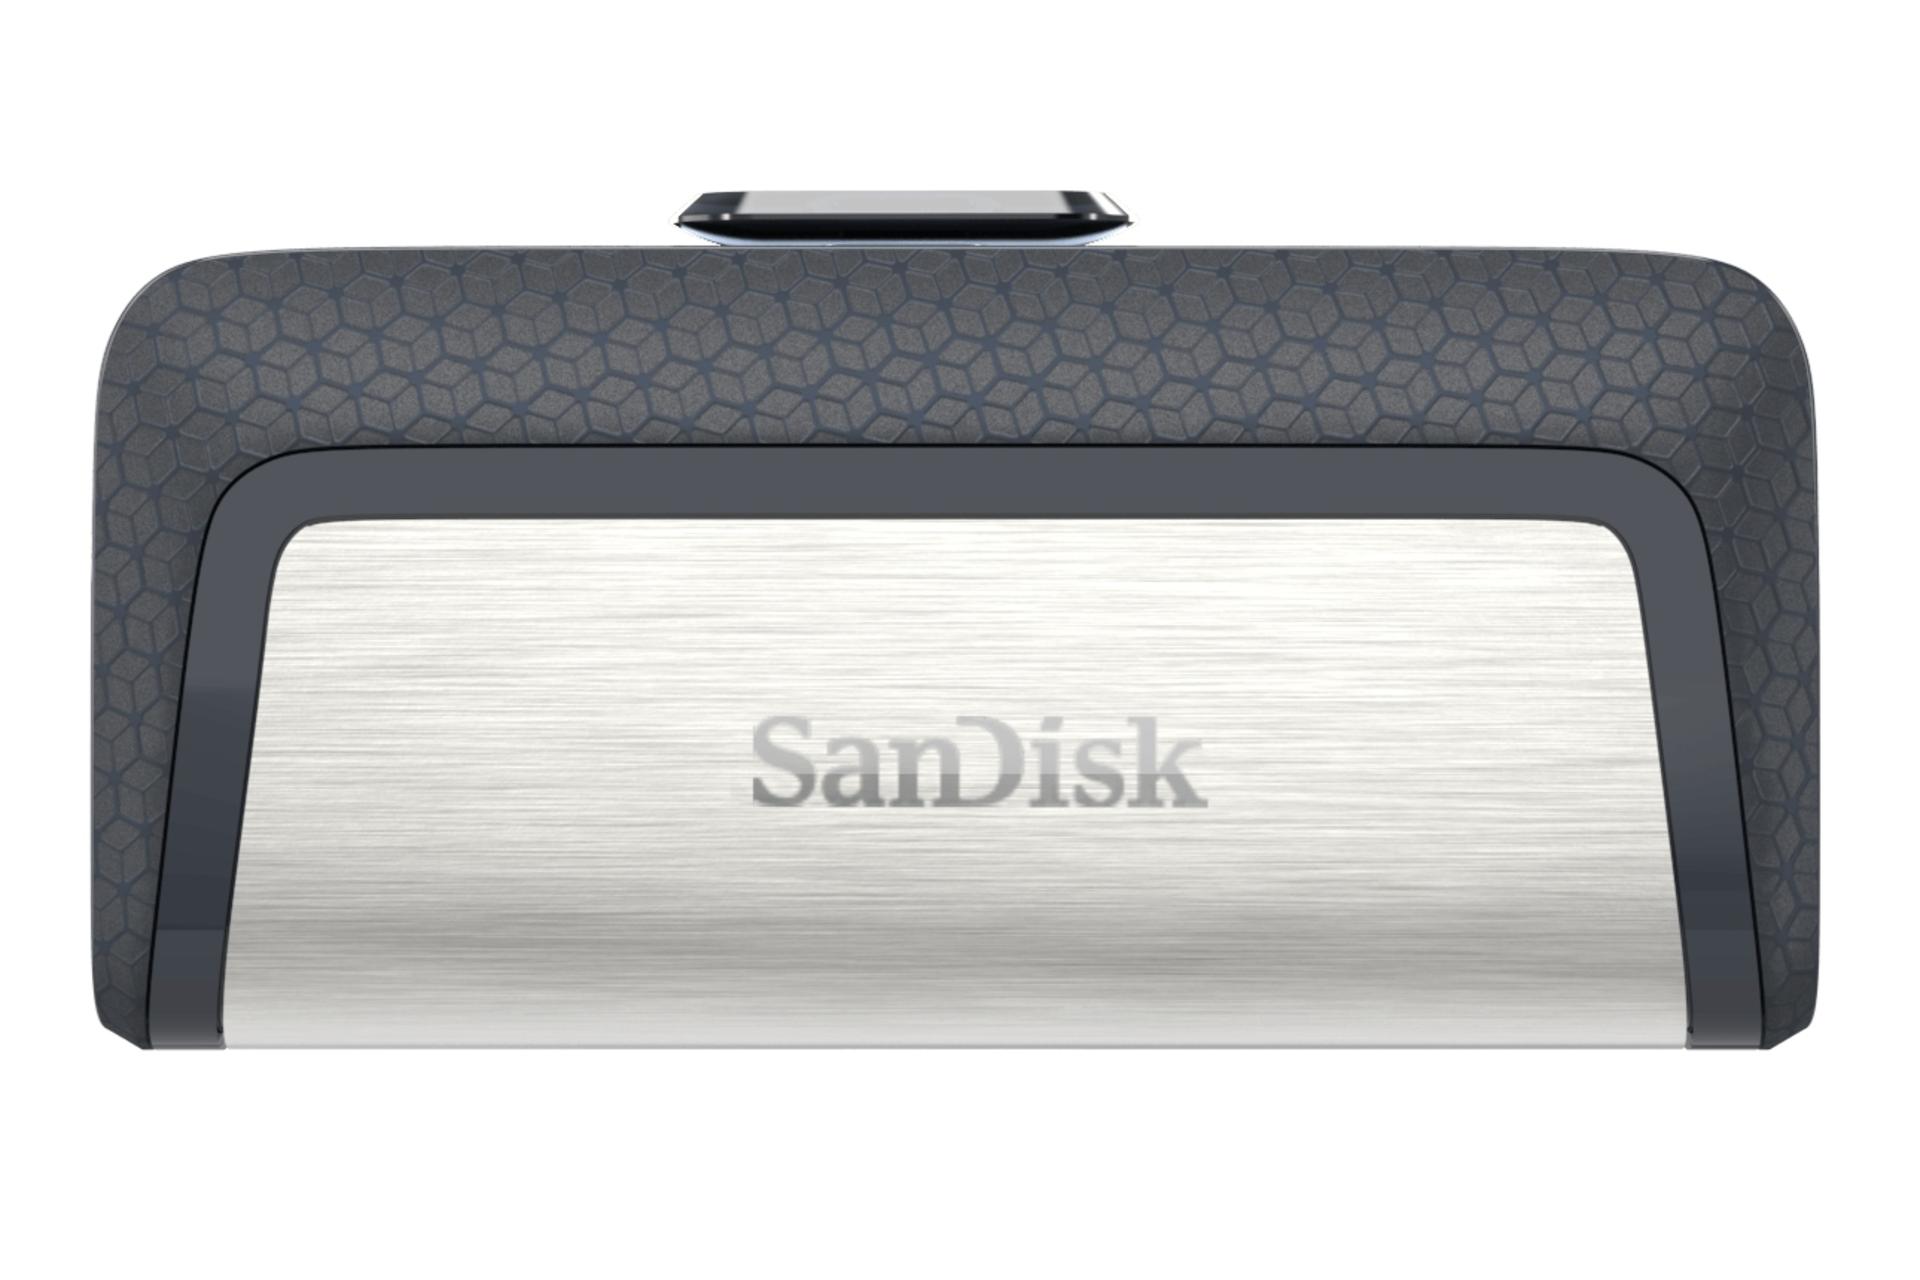 نمای روبرو فلش مموری سن دیسک SanDisk Ultra Dual Drive SDDDC2 در پوشش